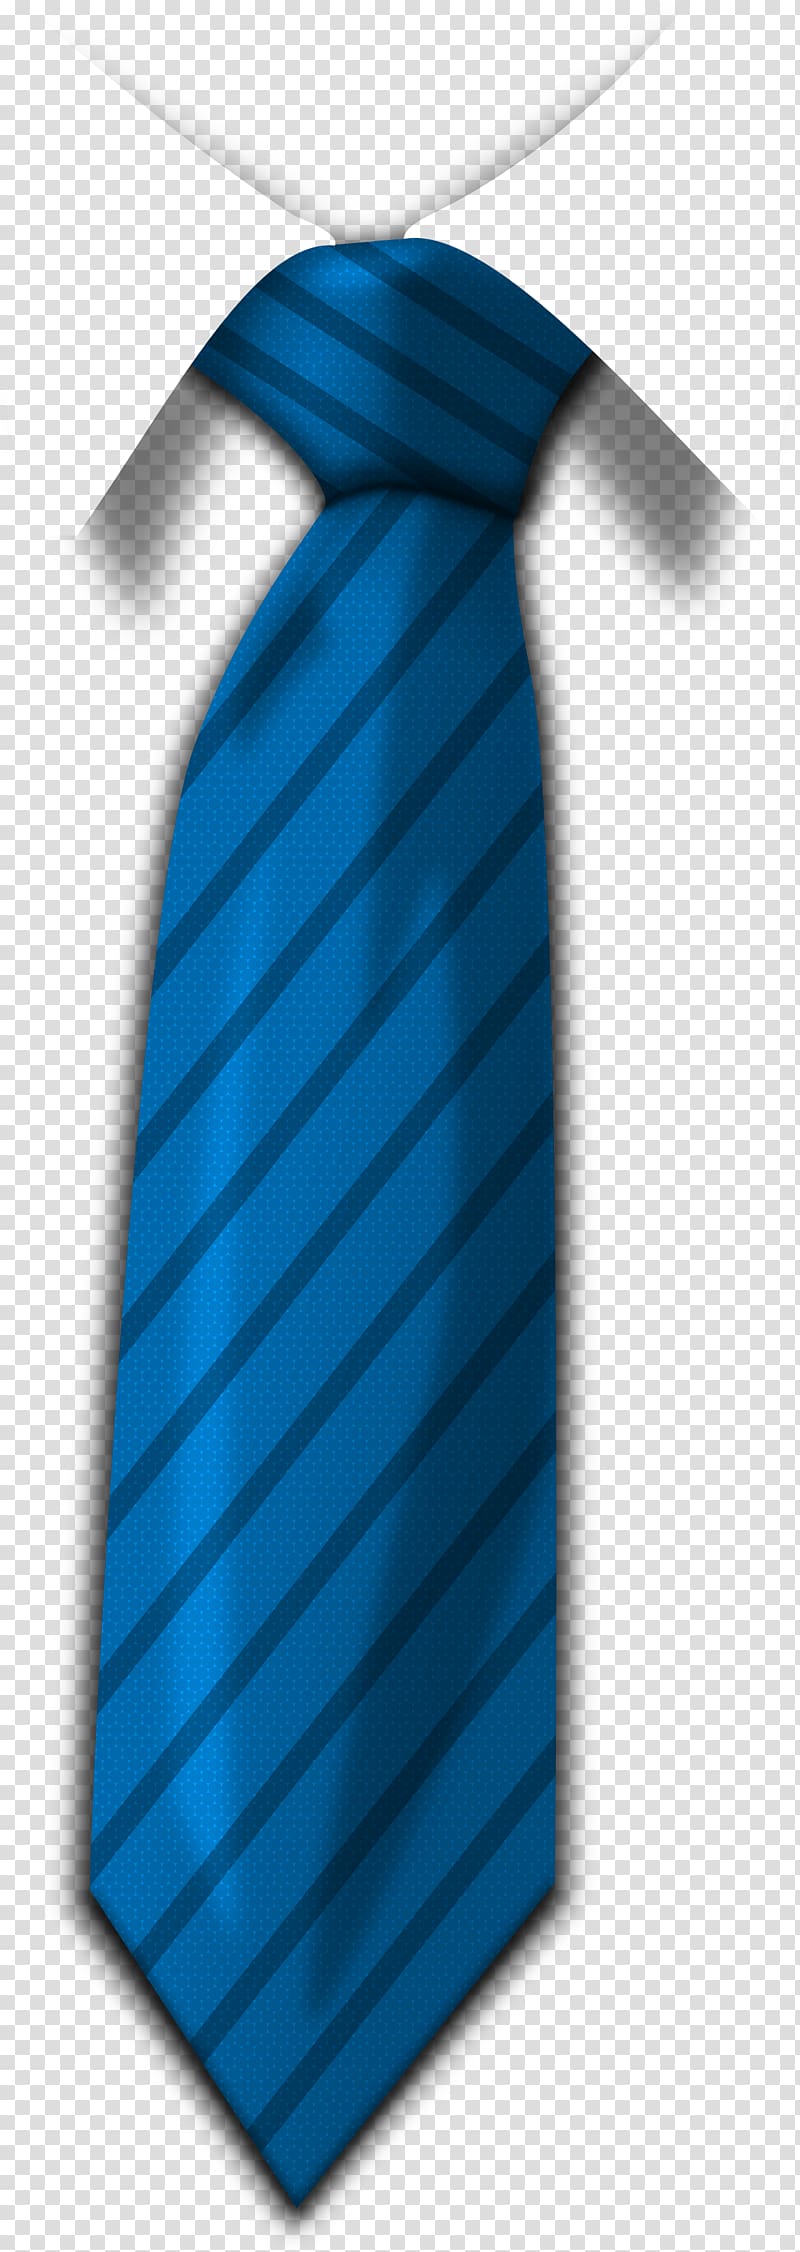 blue striped necktie illustration, Necktie Bow tie, Blue Tie transparent background PNG clipart